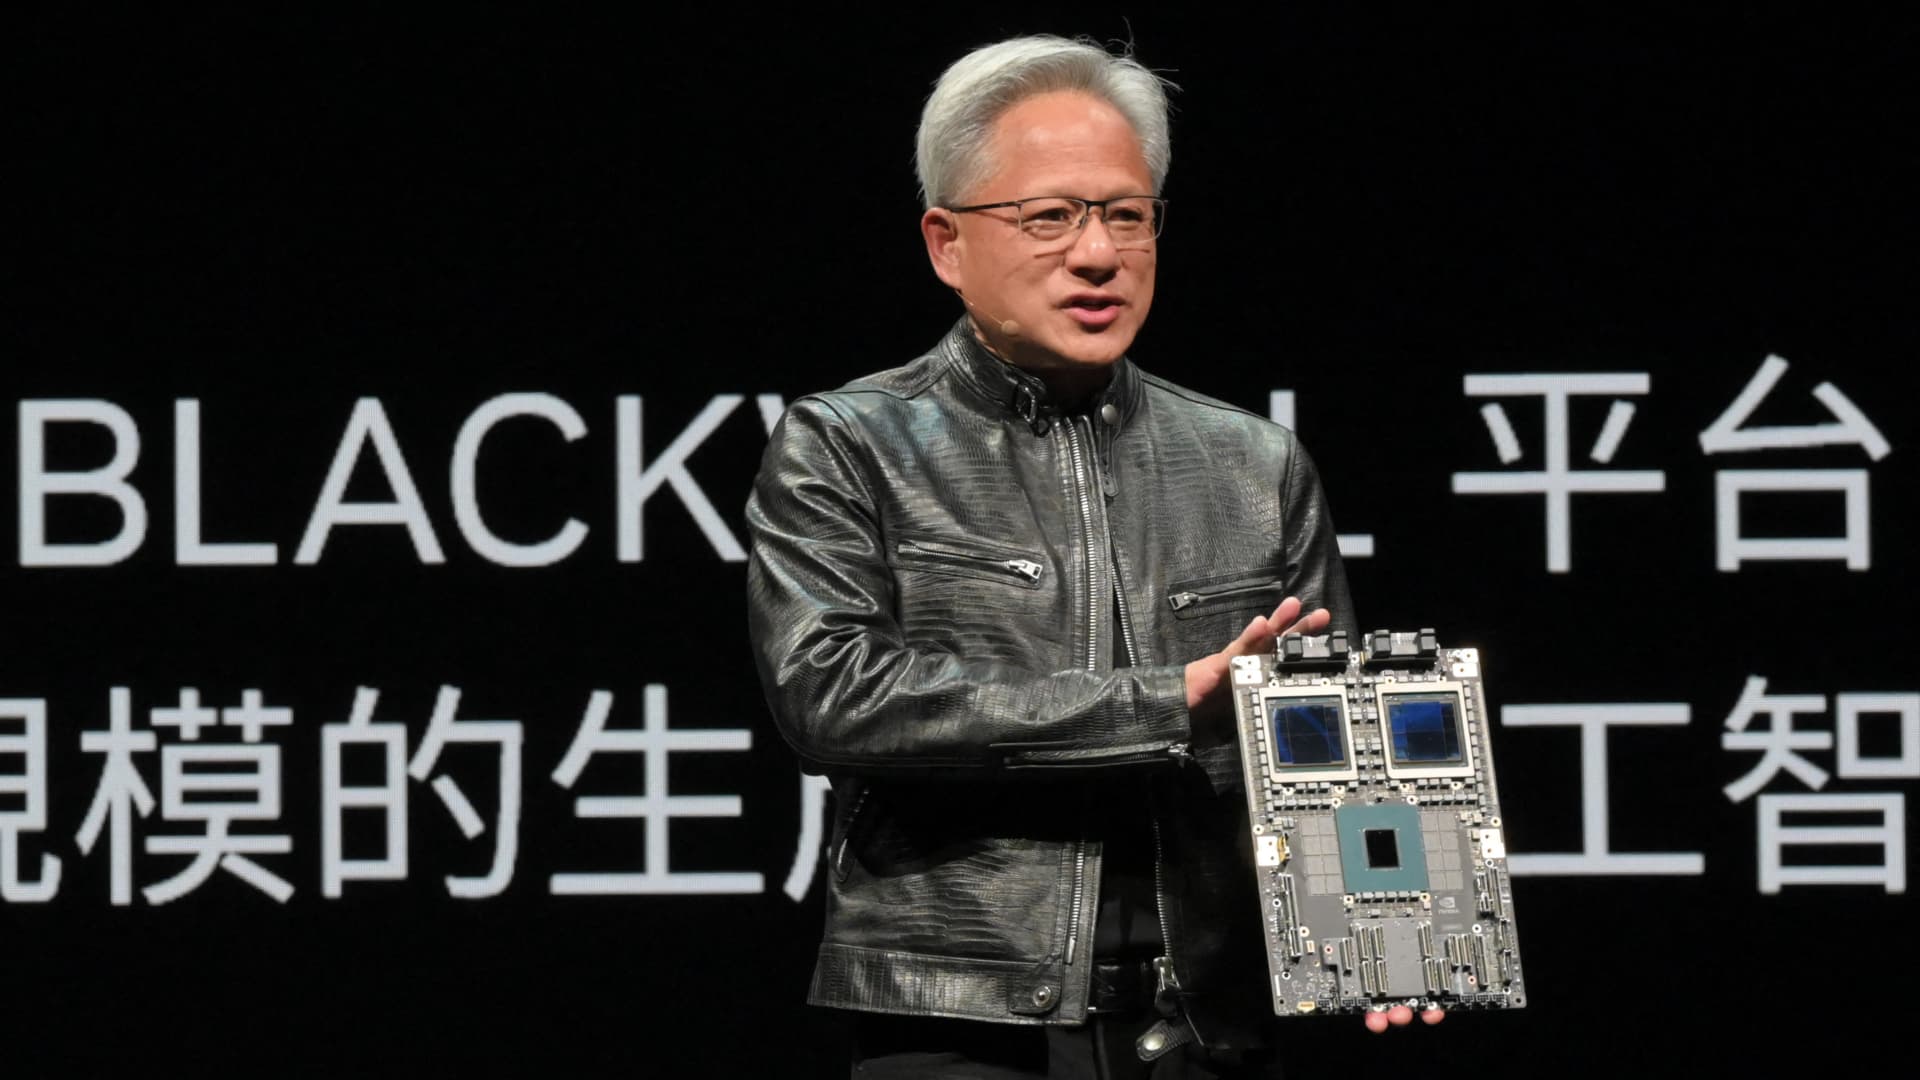 Nvidia hits $3 trillion market cap on back of AI boom